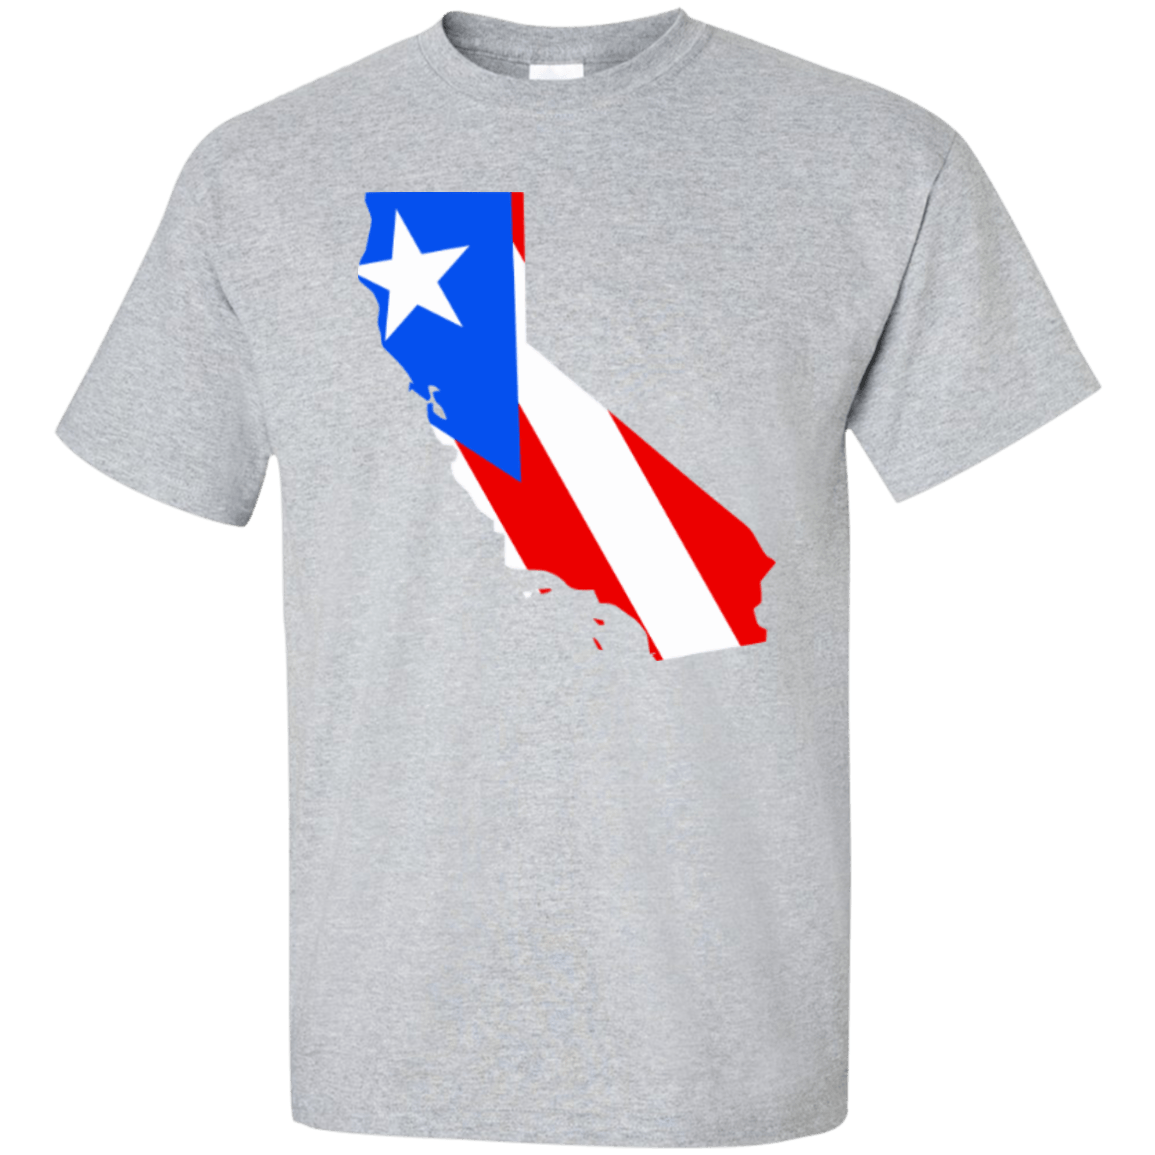 Shirt - California Rican